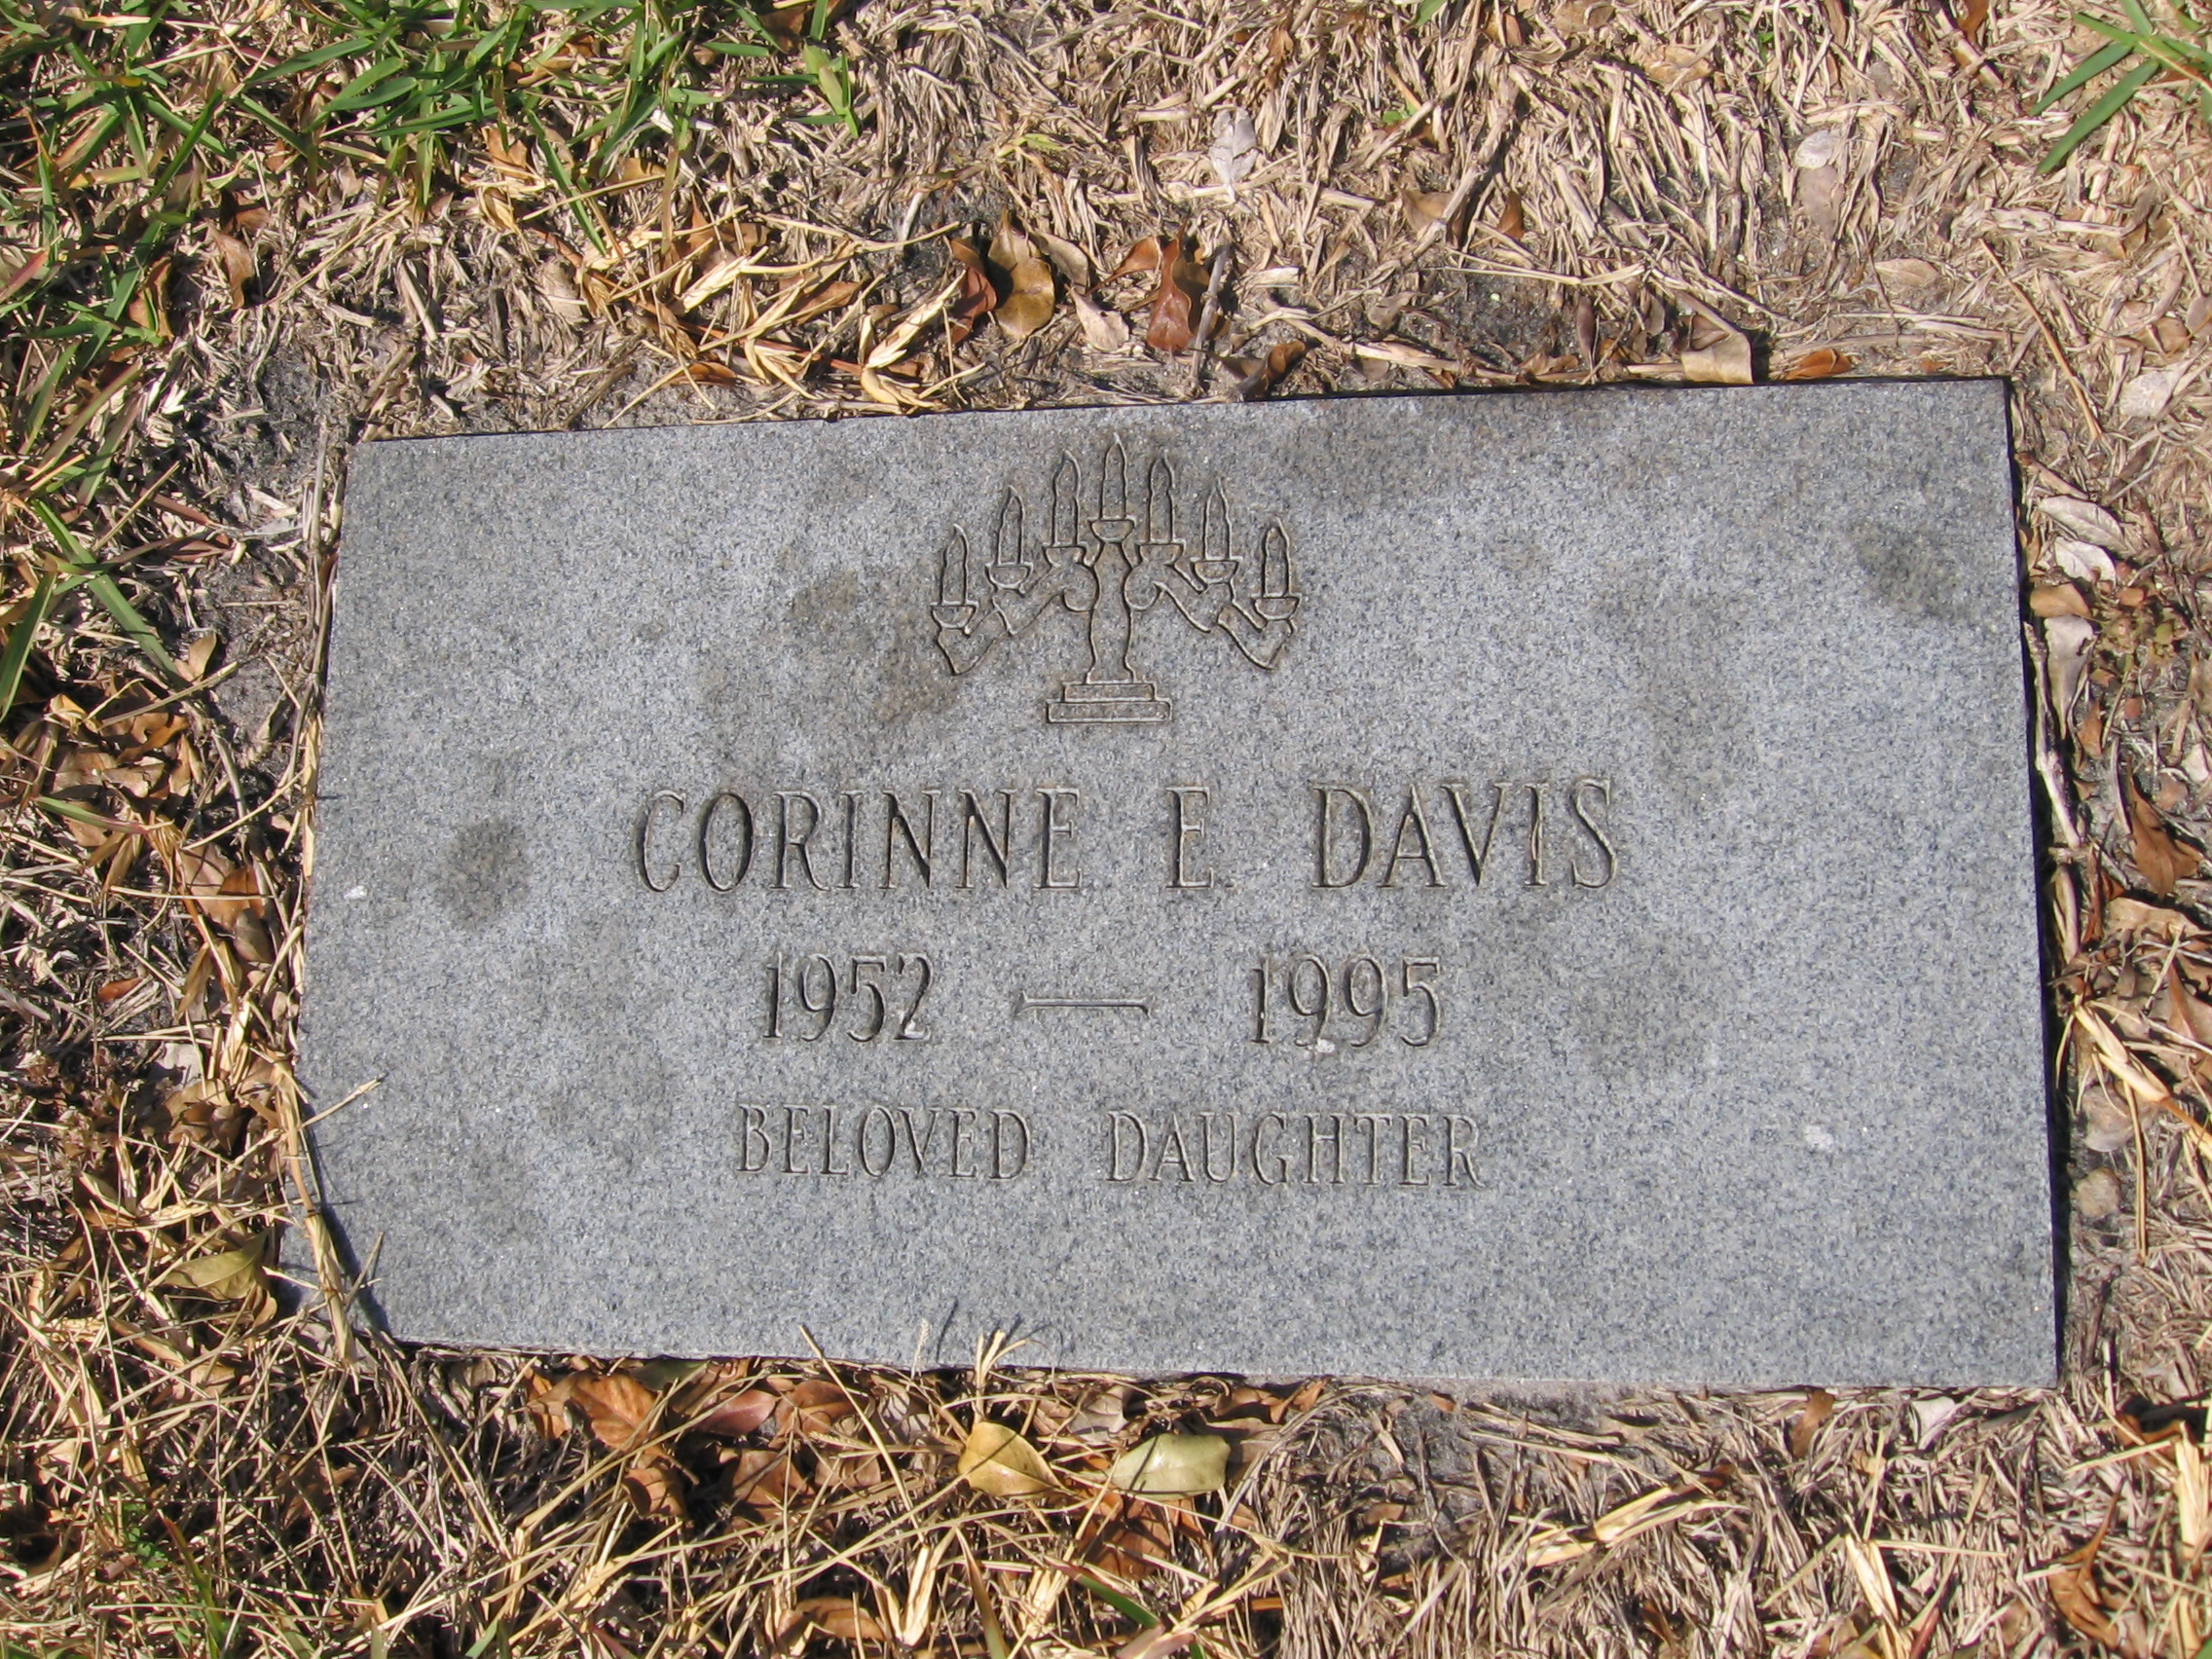 Corinne E Davis